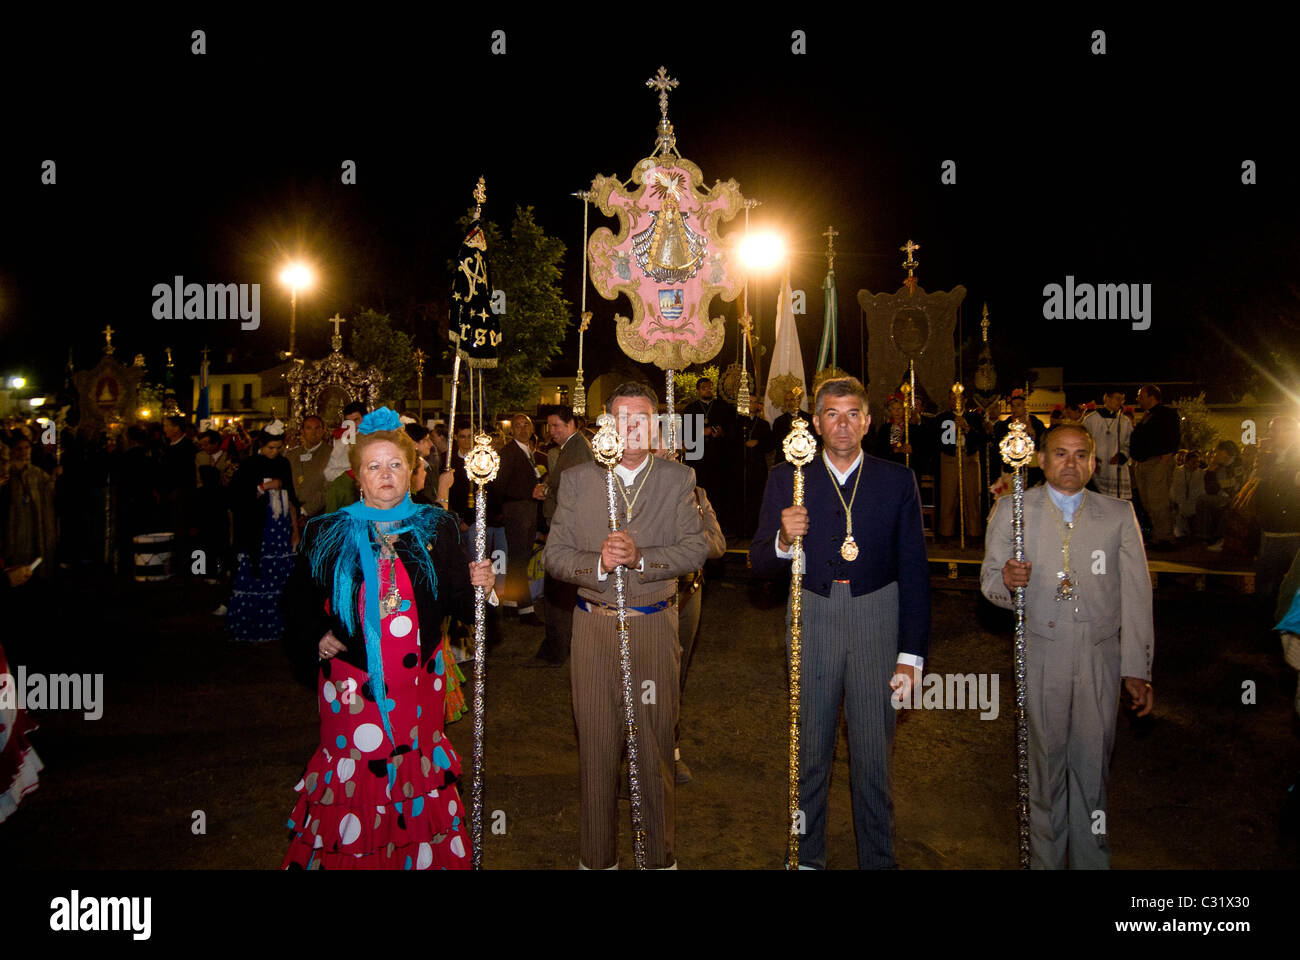 Romeria del Rocio pilgrimage en Andalousie, Espagne Banque D'Images